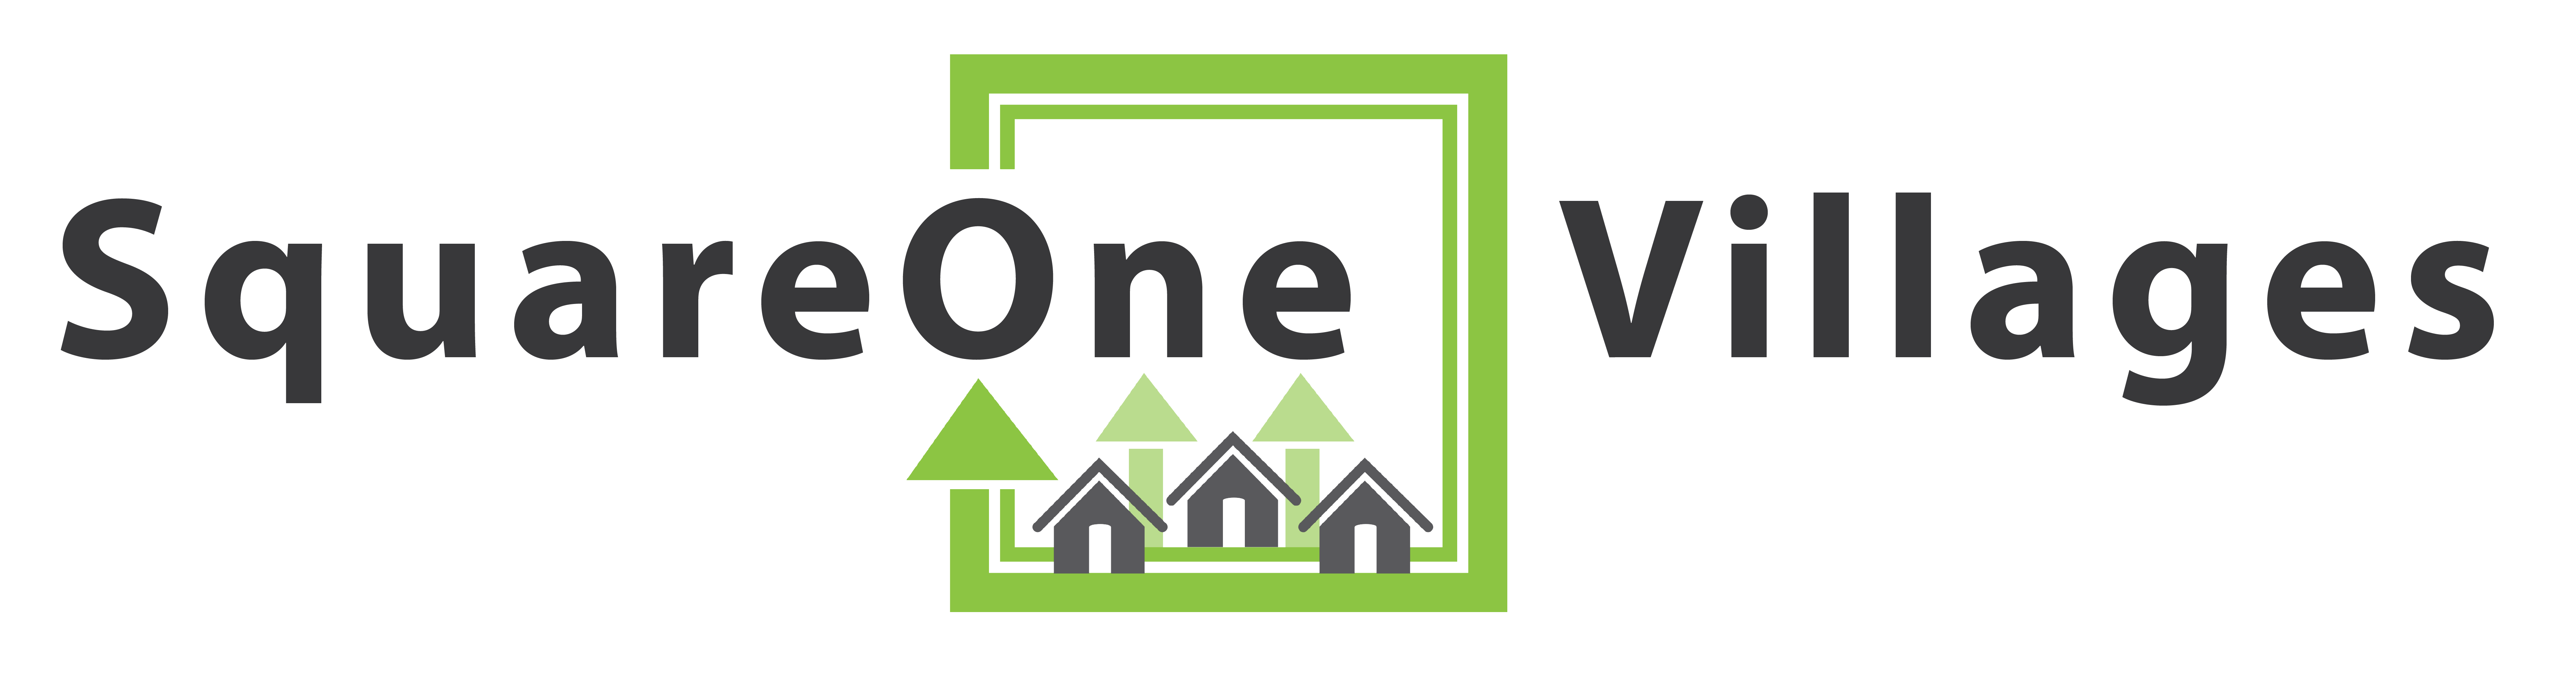 SquareOne Villages logo